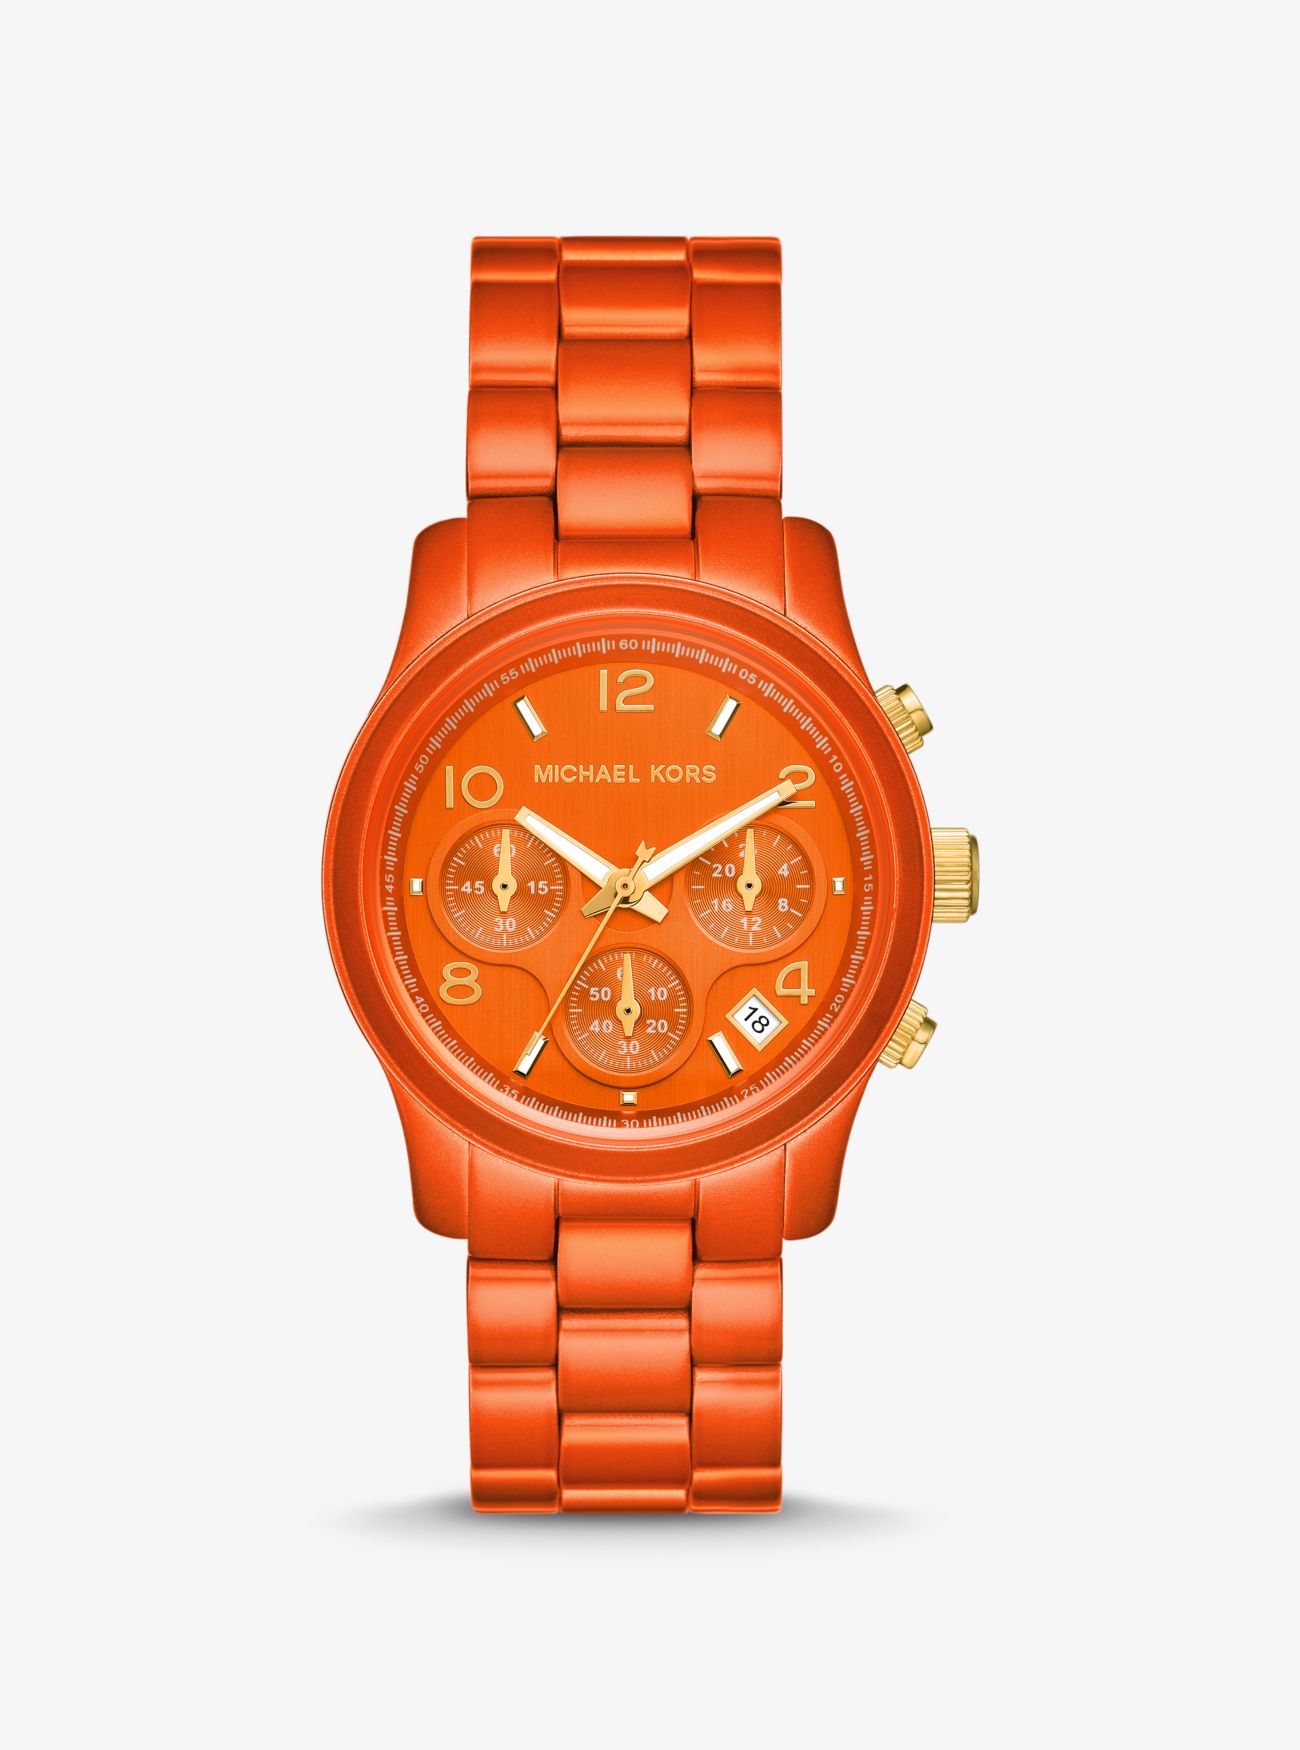 MK Limited-Edition Runway Orange-Tone Watch - Orange - Michael Kors